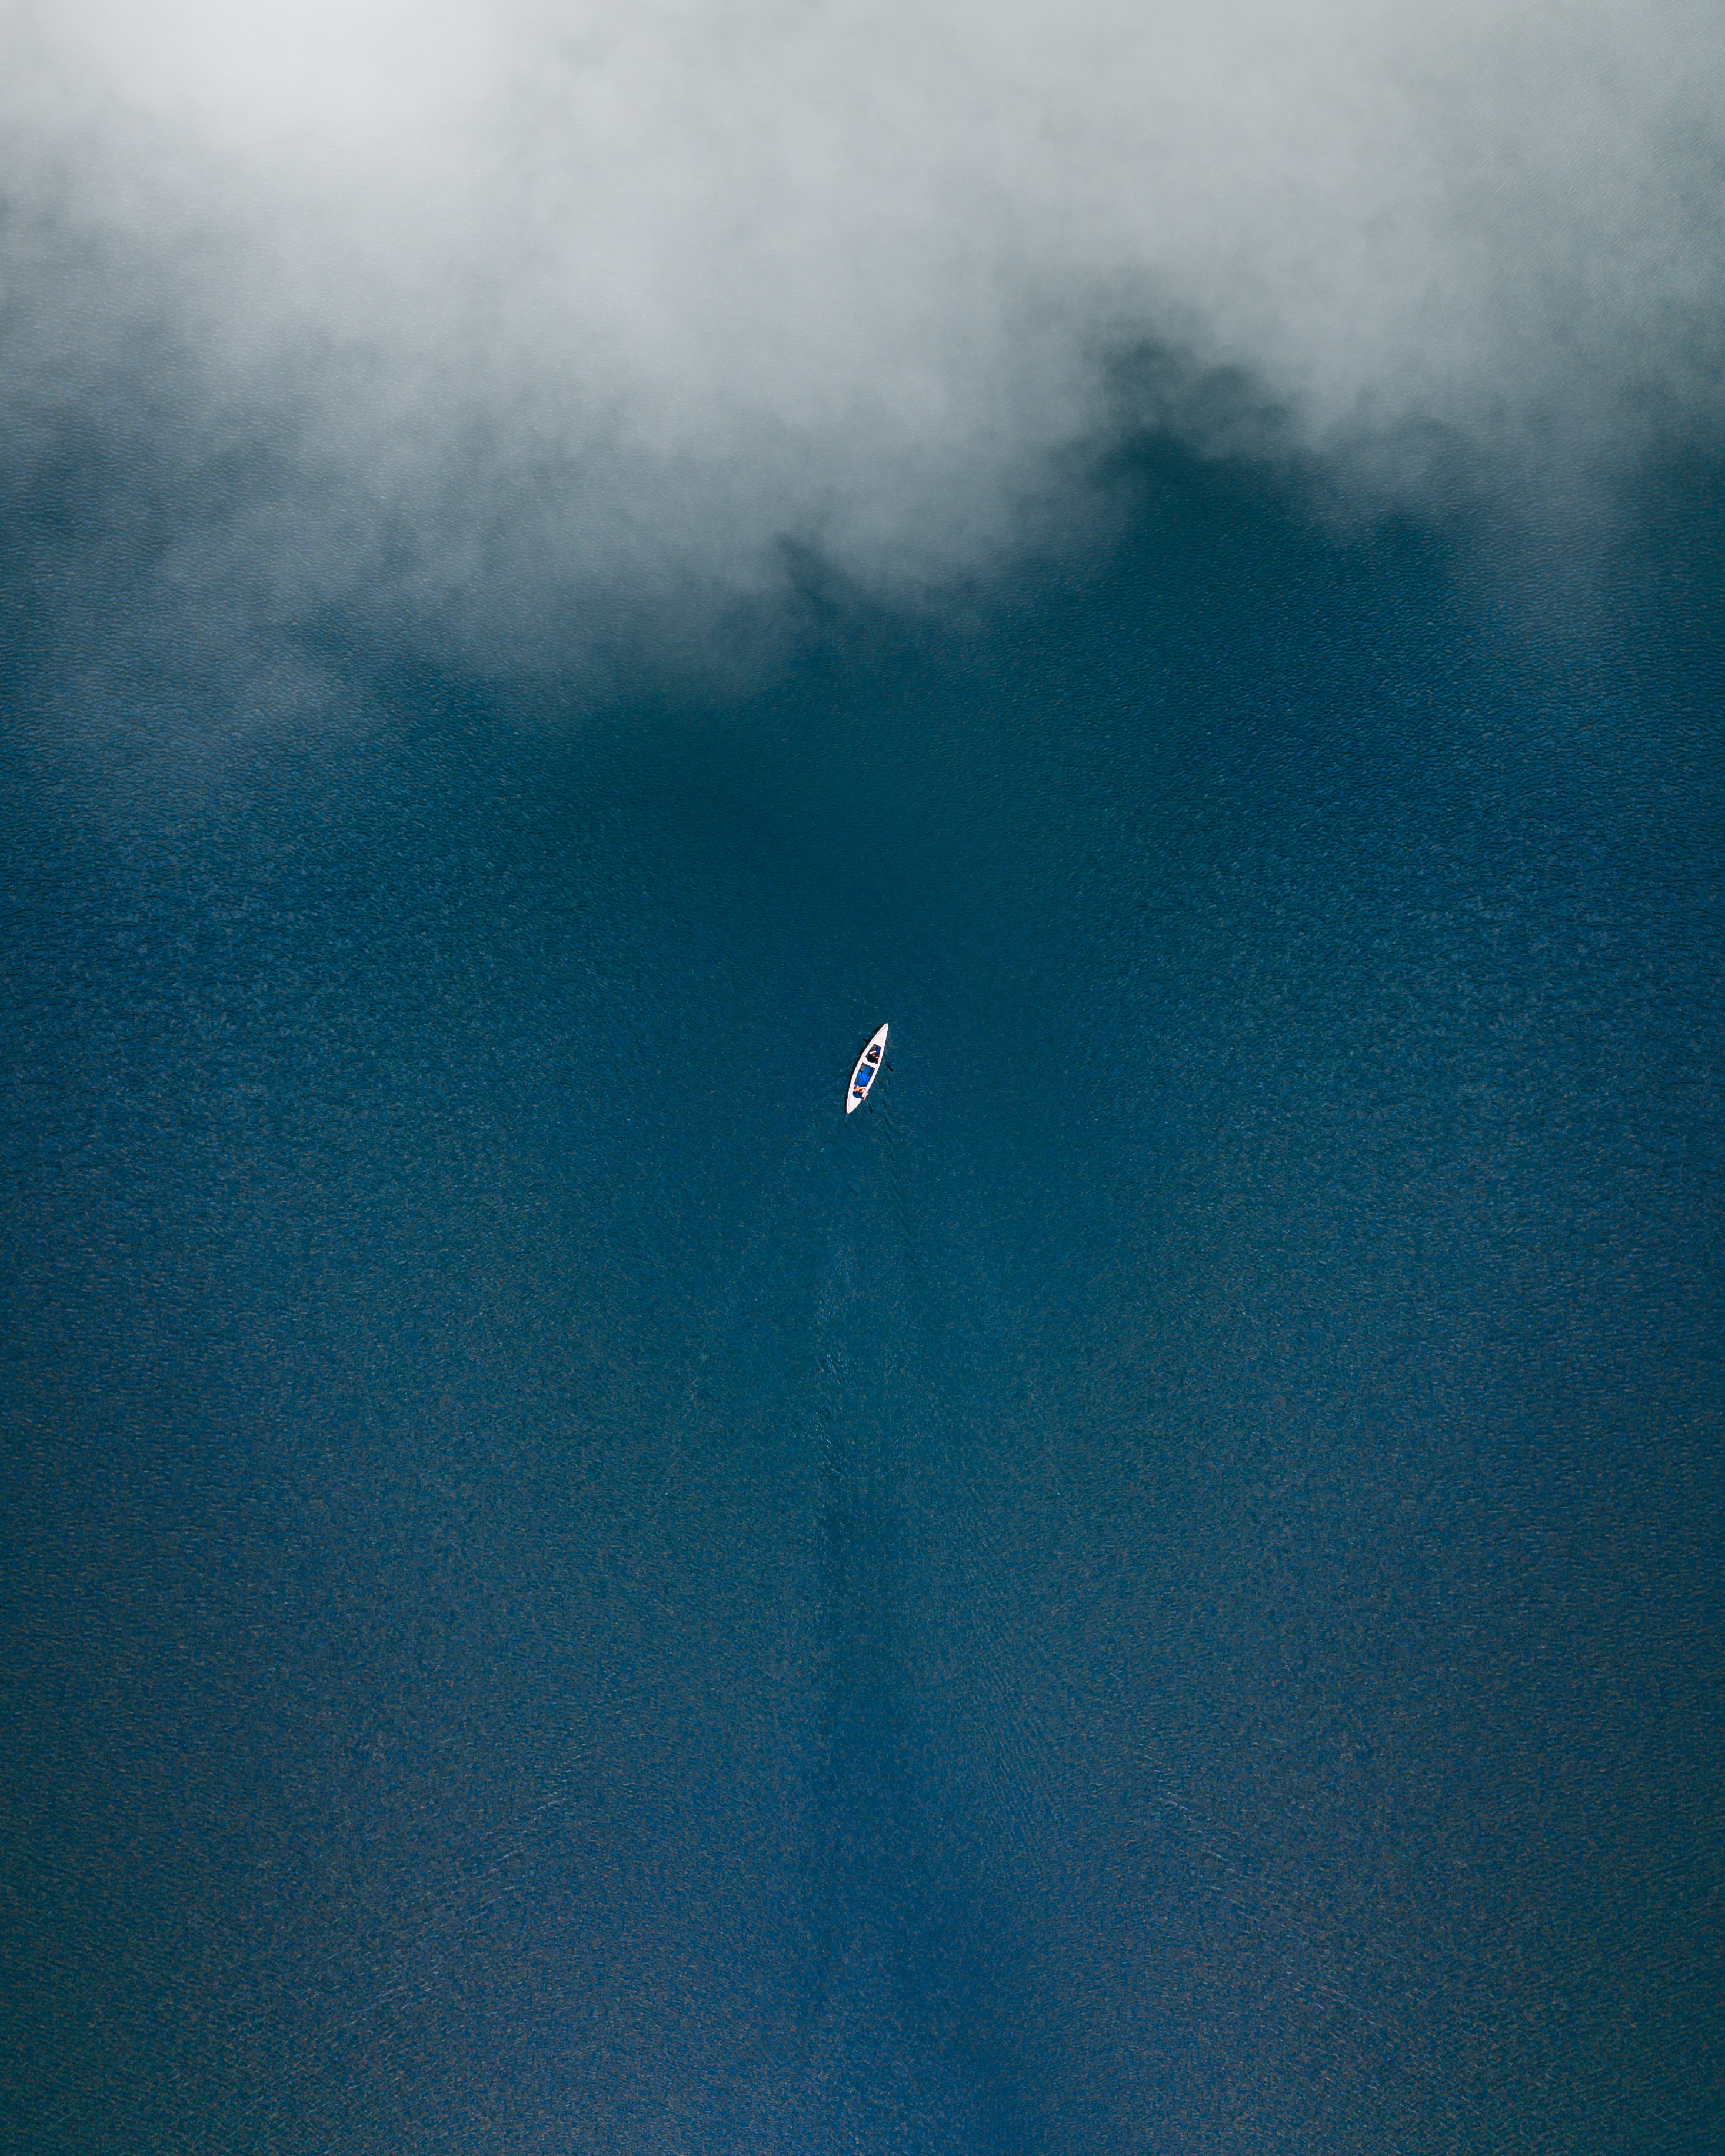 110852 descargar imagen naturaleza, agua, vista desde arriba, niebla, un barco, bote: fondos de pantalla y protectores de pantalla gratis